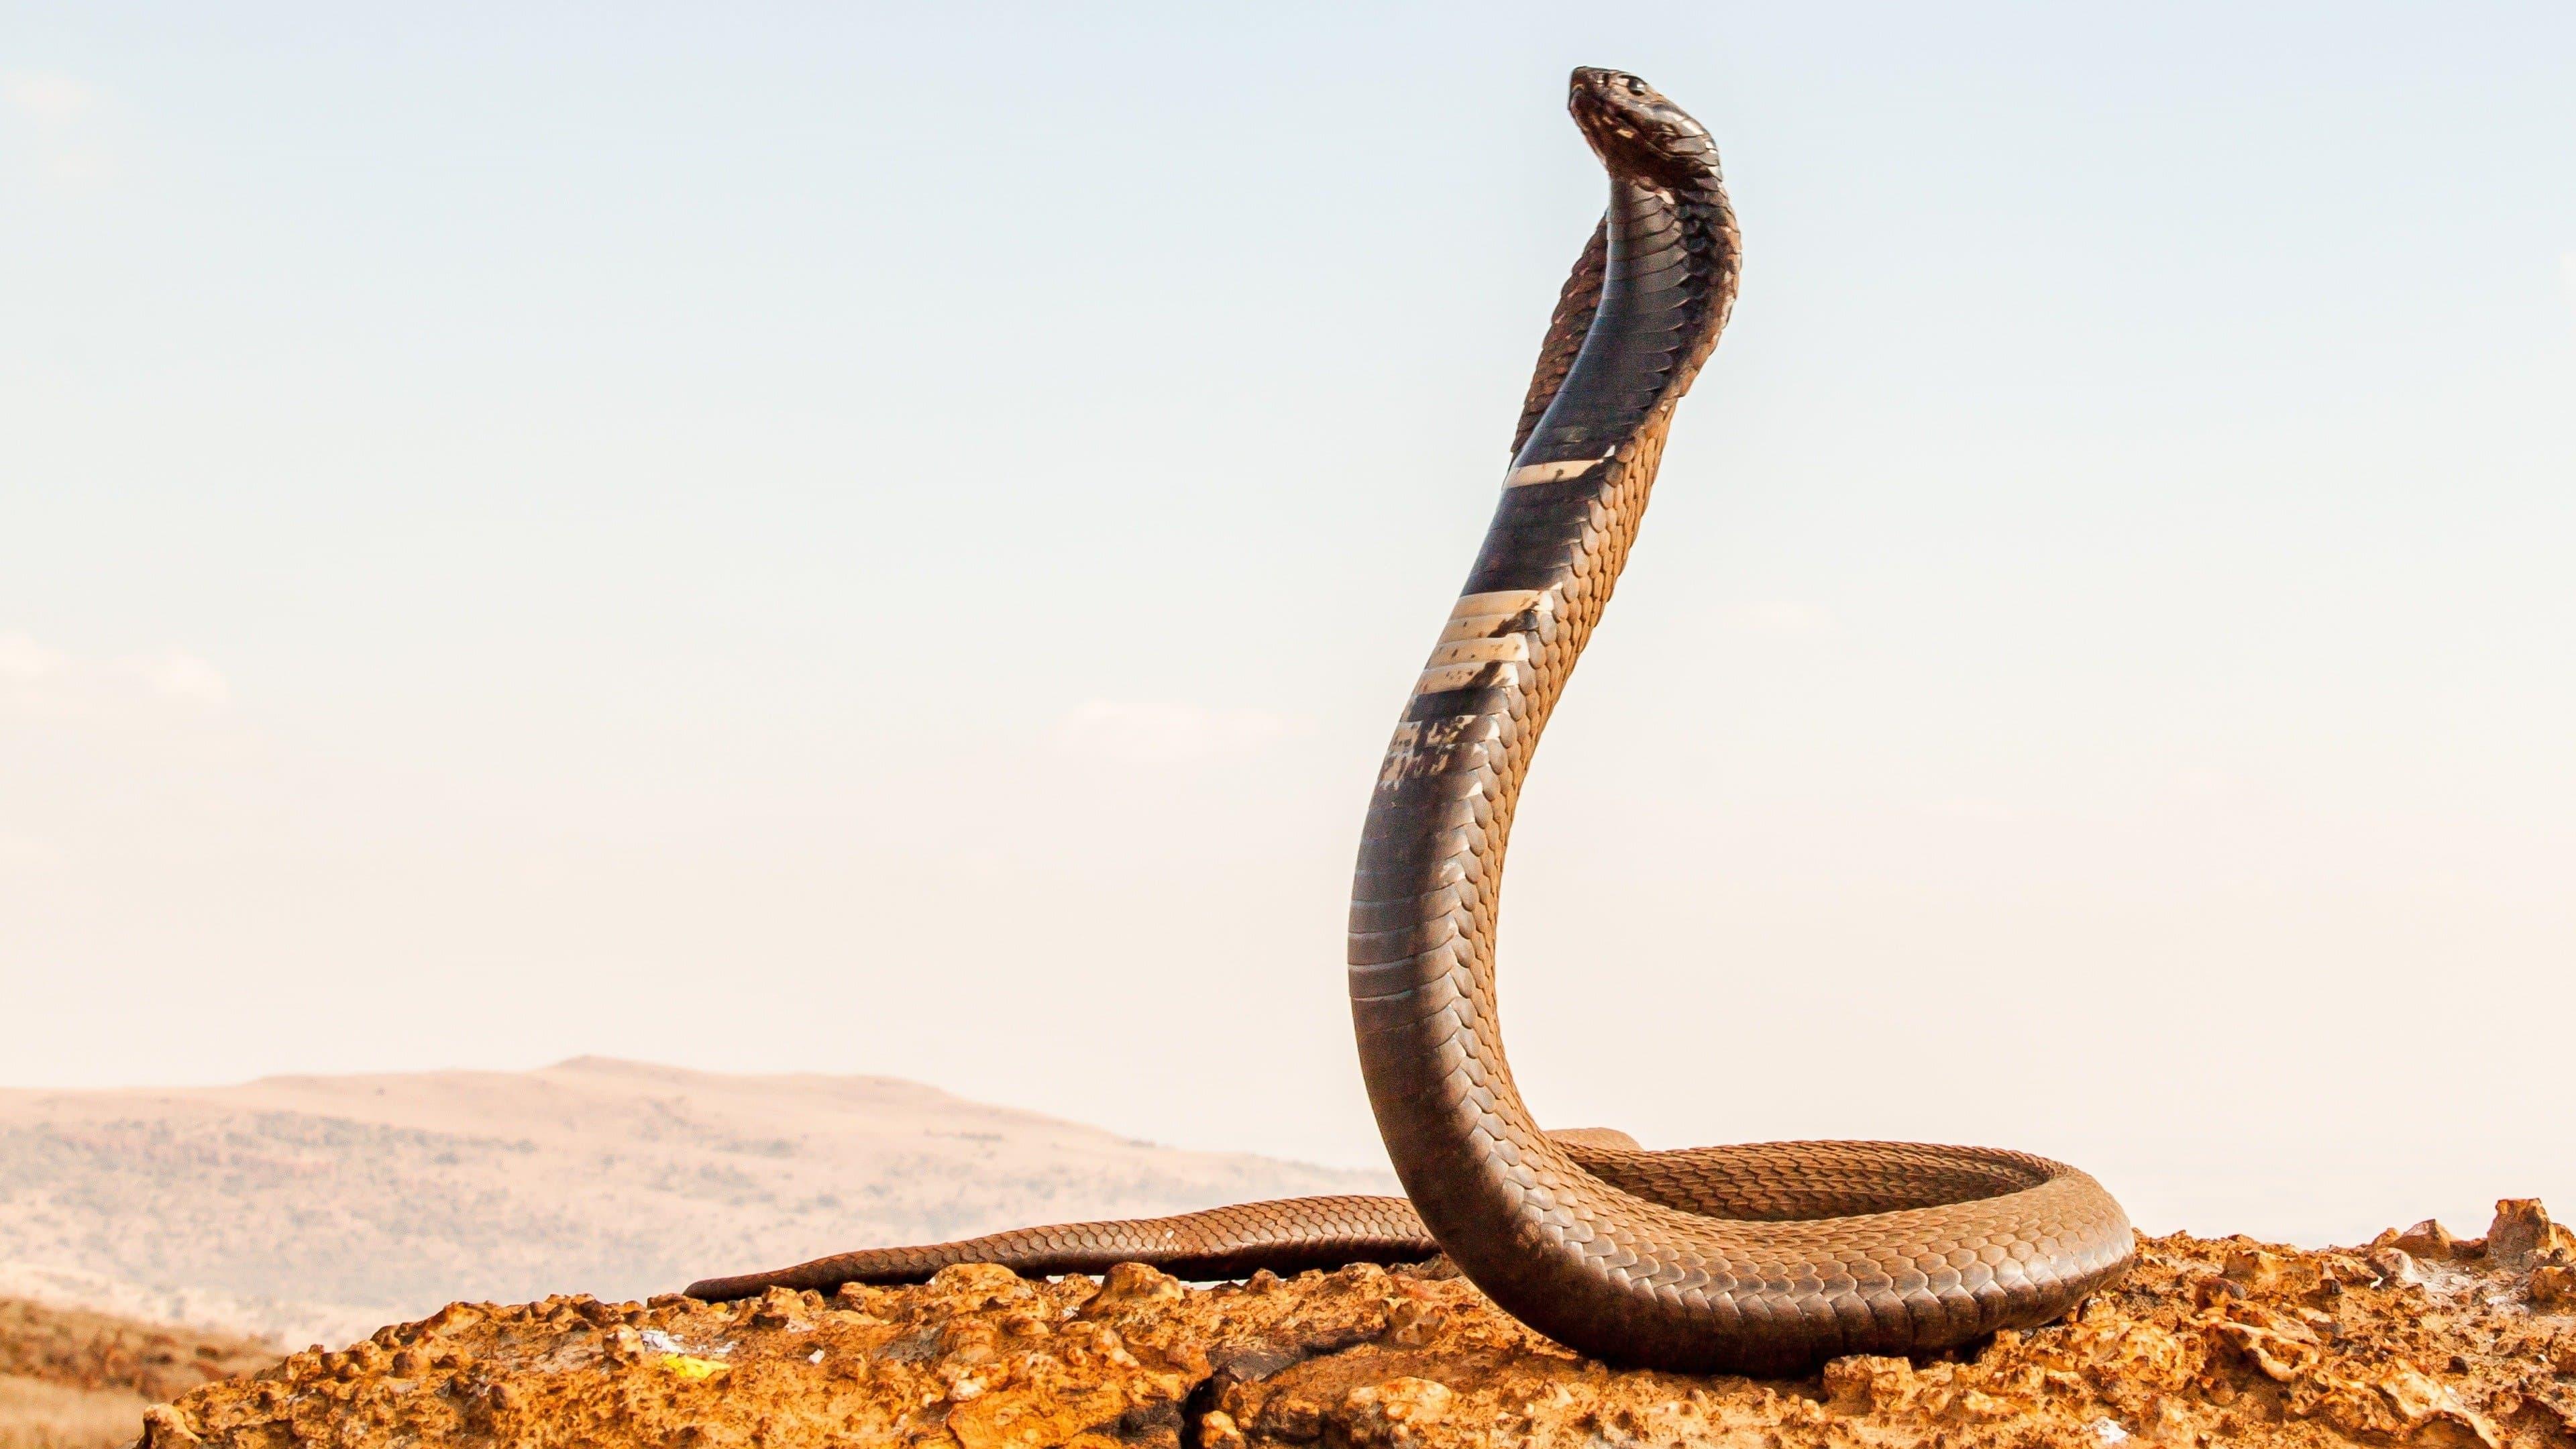 Extreme Snakes backdrop